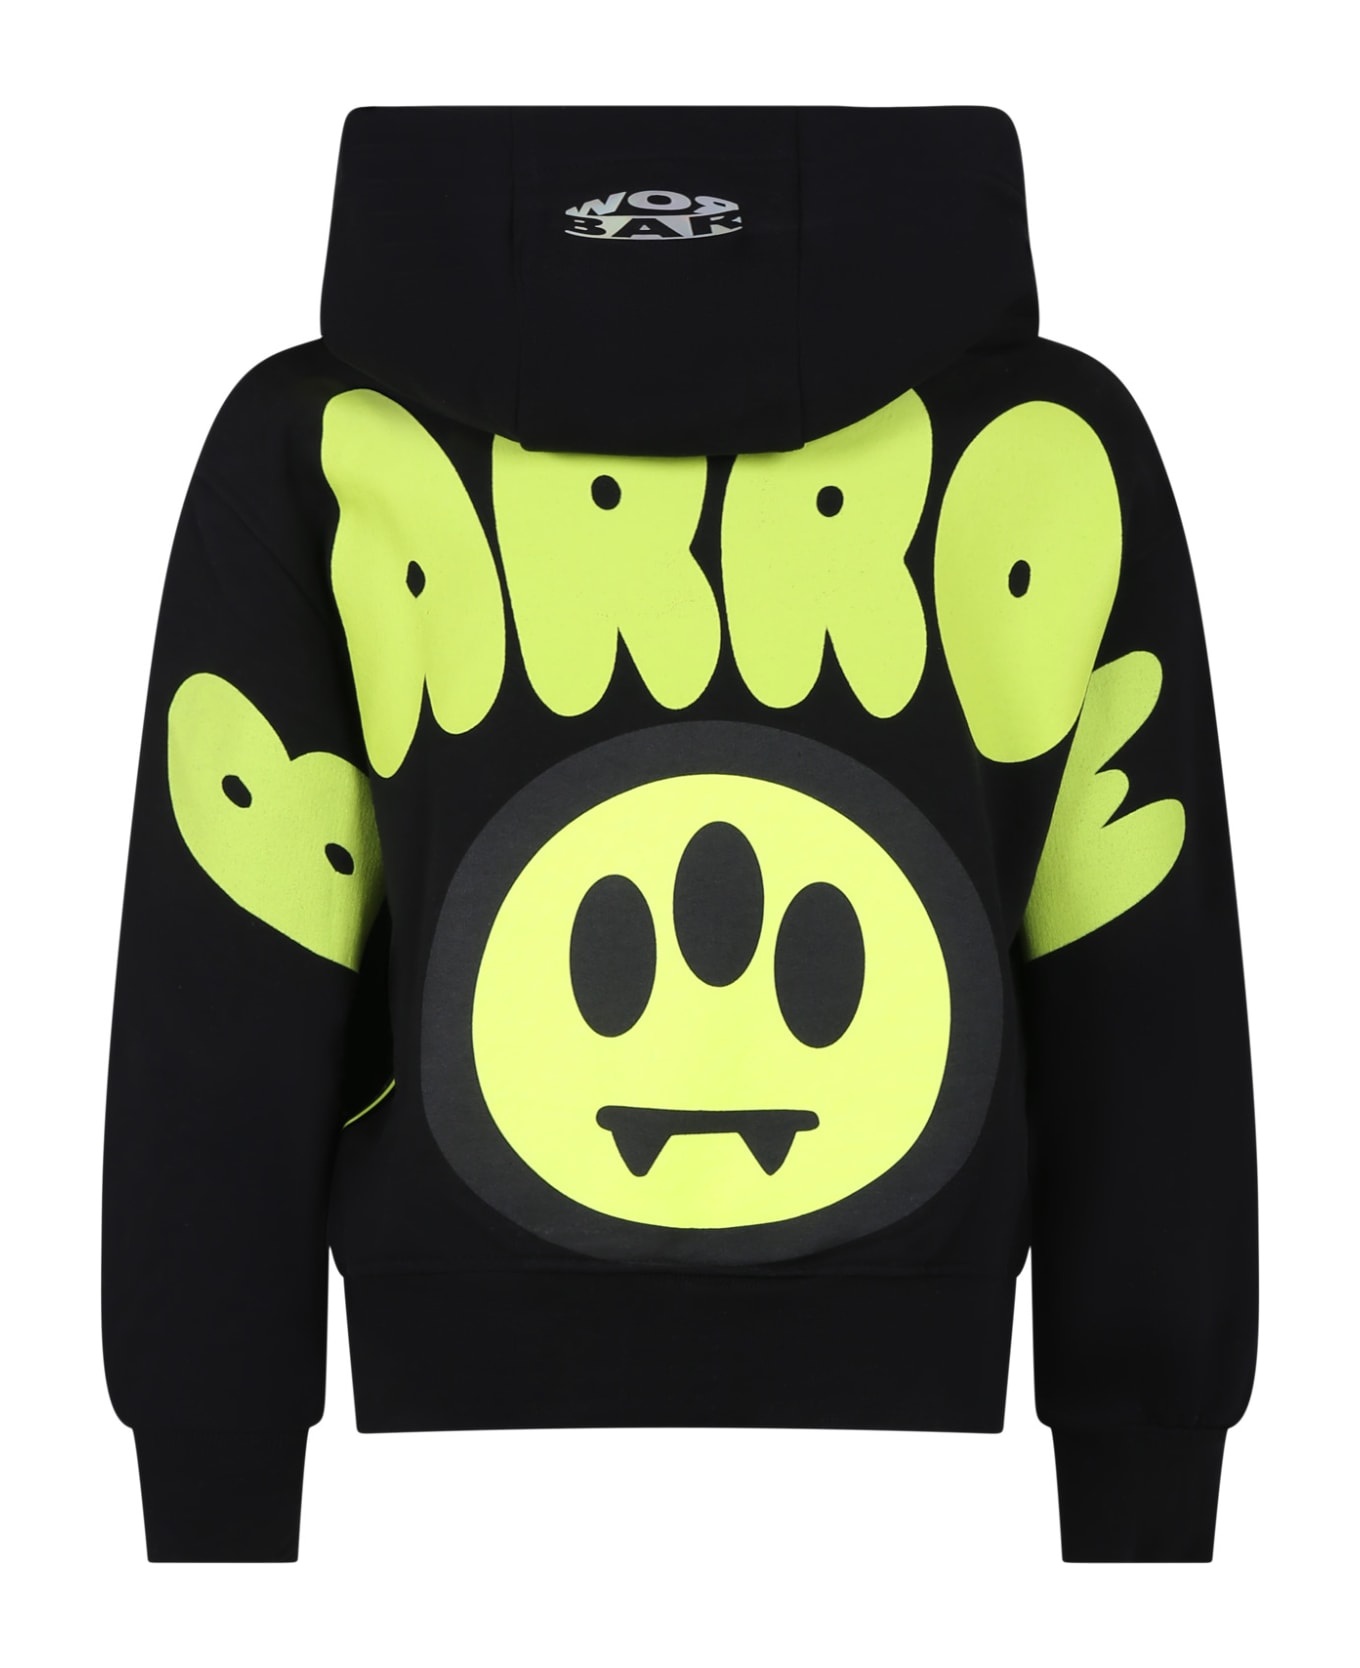 Barrow Black Sweatshirt For Kids With Logo And Iconic Smiley Face - Nero ニットウェア＆スウェットシャツ